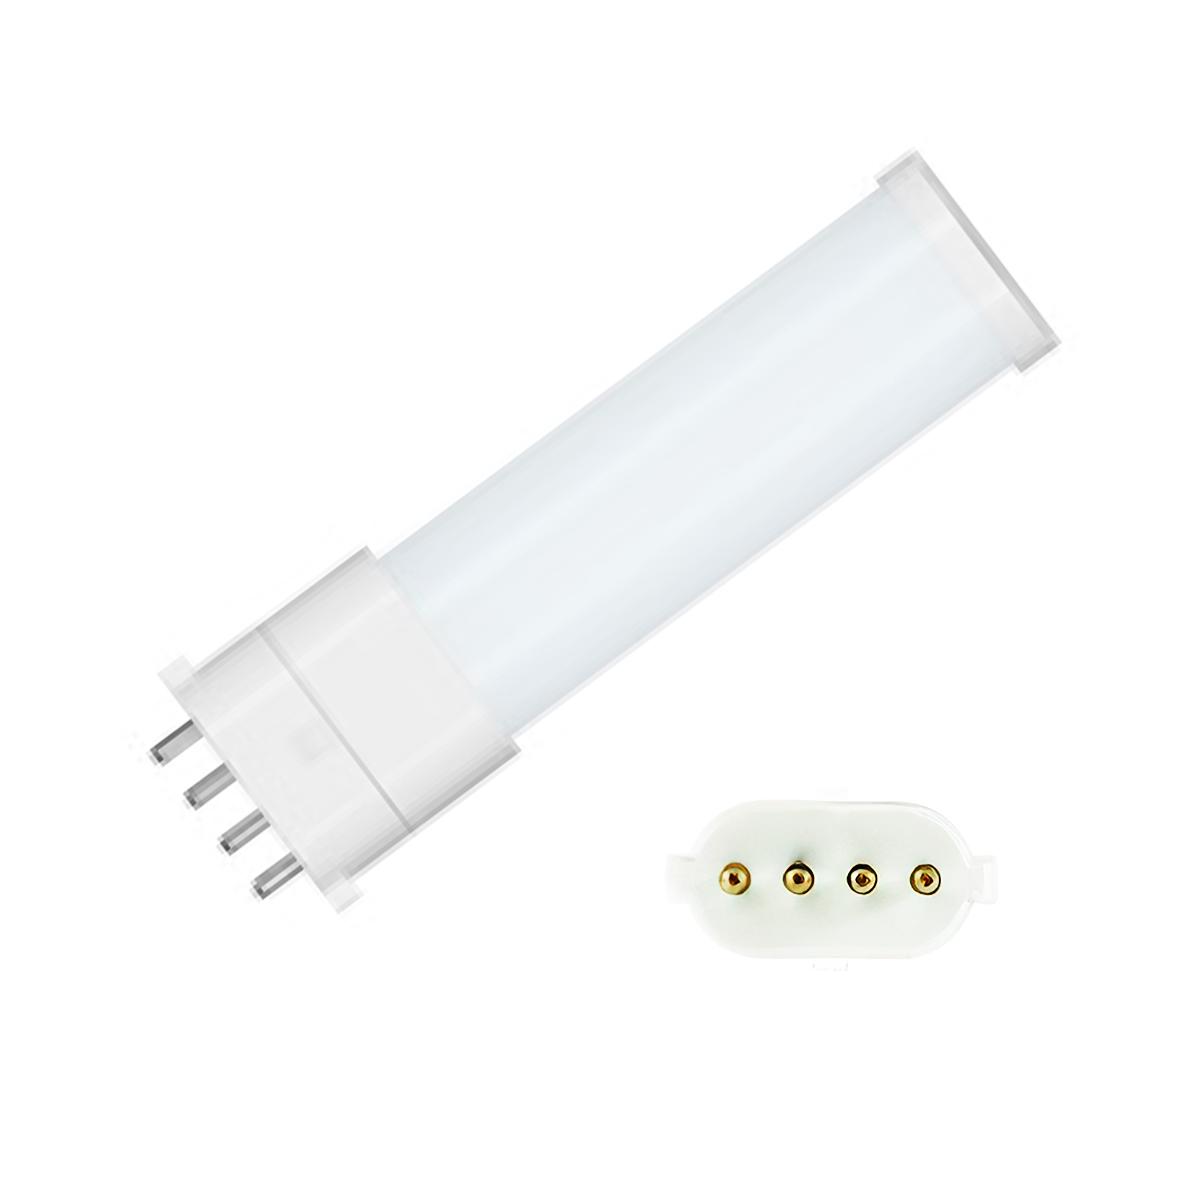 4 Pin PLL LED Bulb, 3.5 Watt 350 Lumens, 3500K, Horizontal, Replaces 9W CFL, 2G7 Base, Type B Ballast Bypass